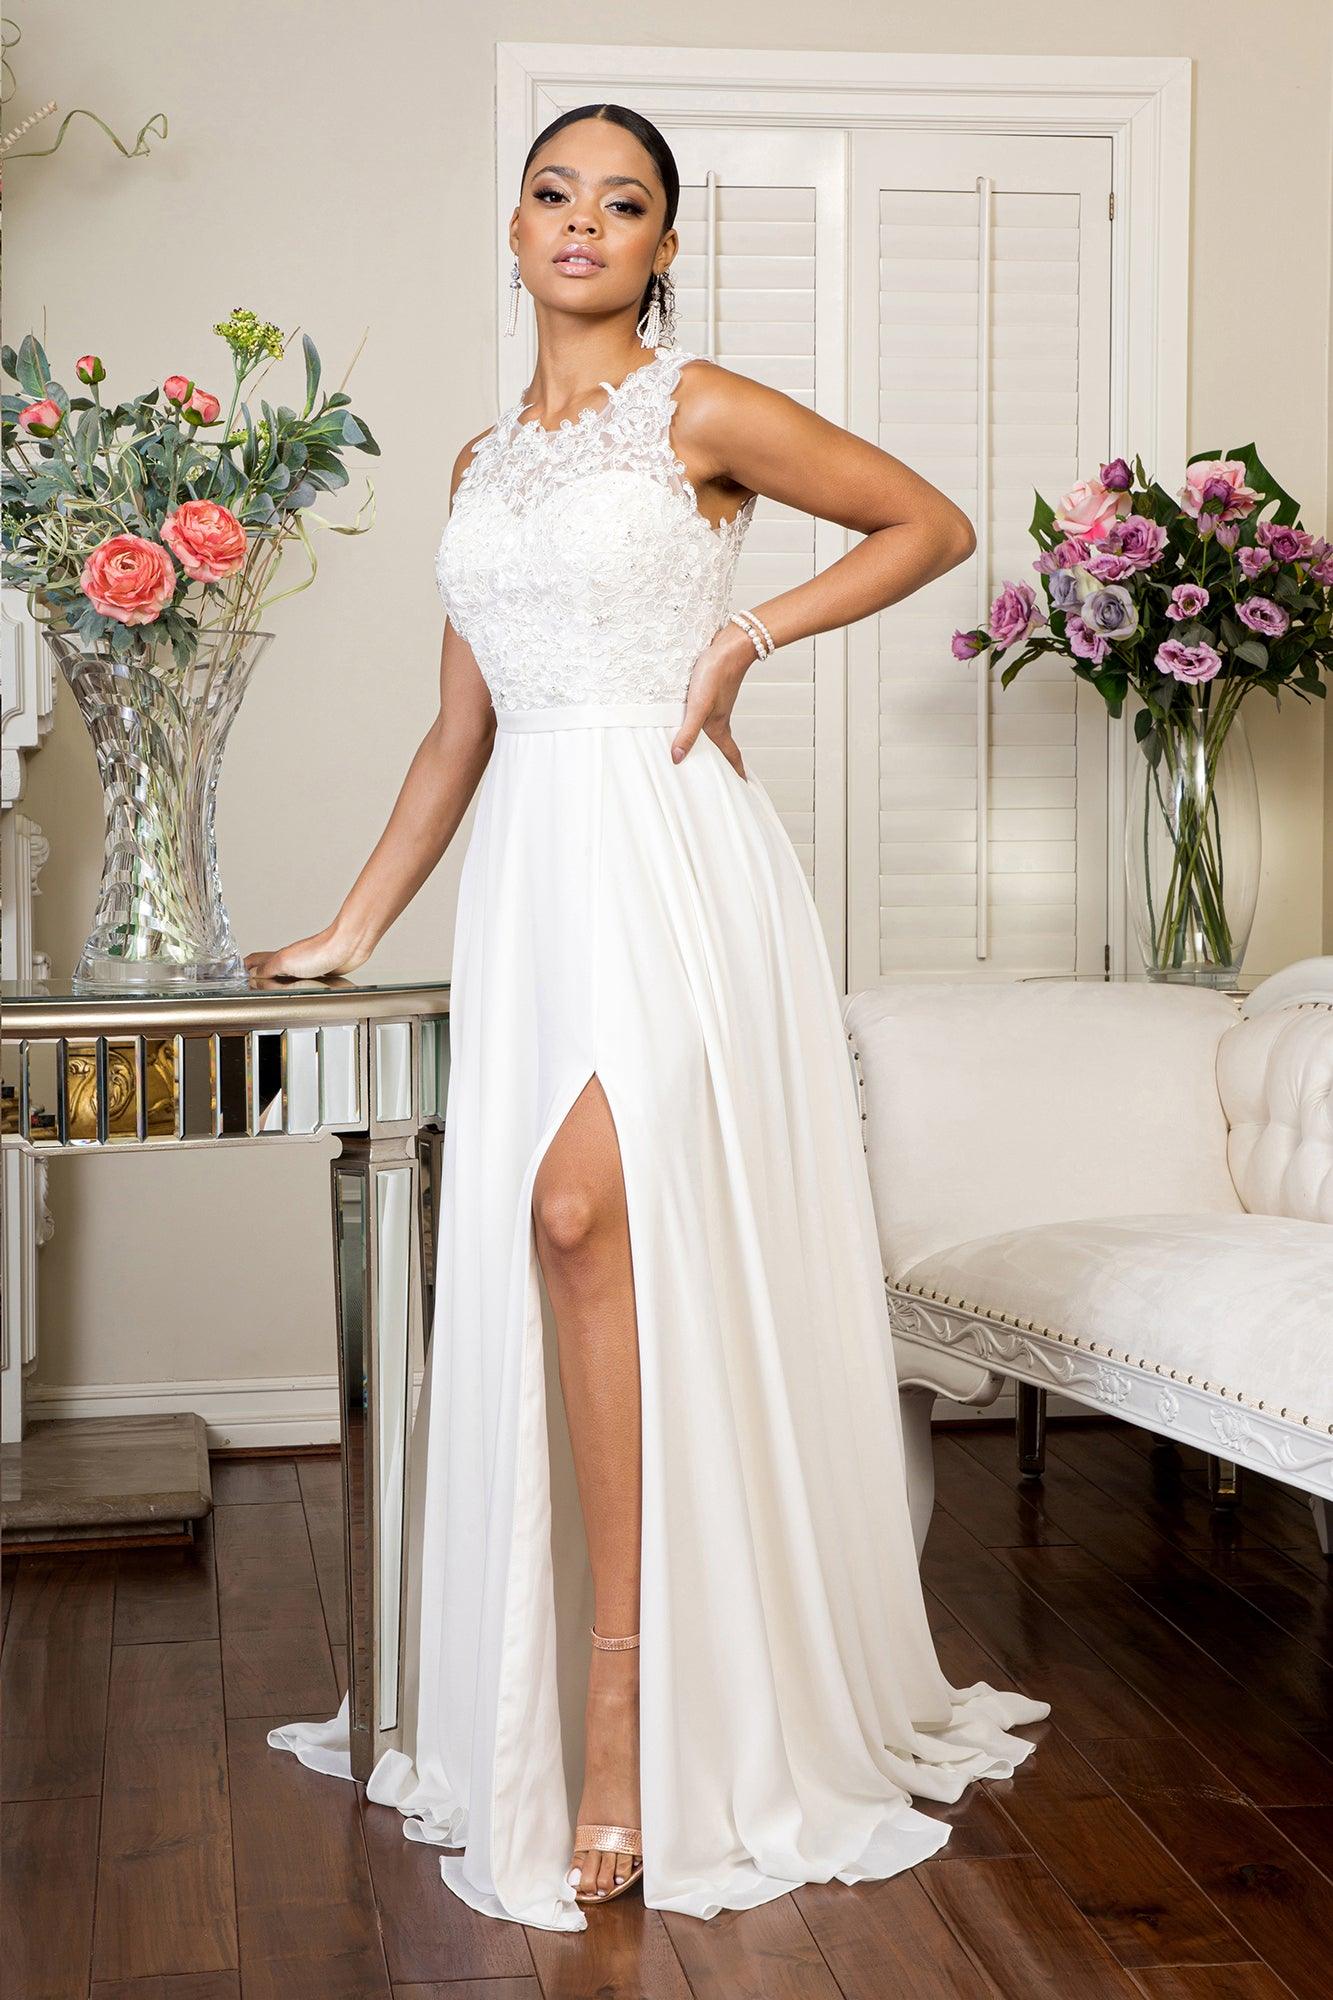 Bridal Long Sleeveless Chiffon Wedding Dress - The Dress Outlet